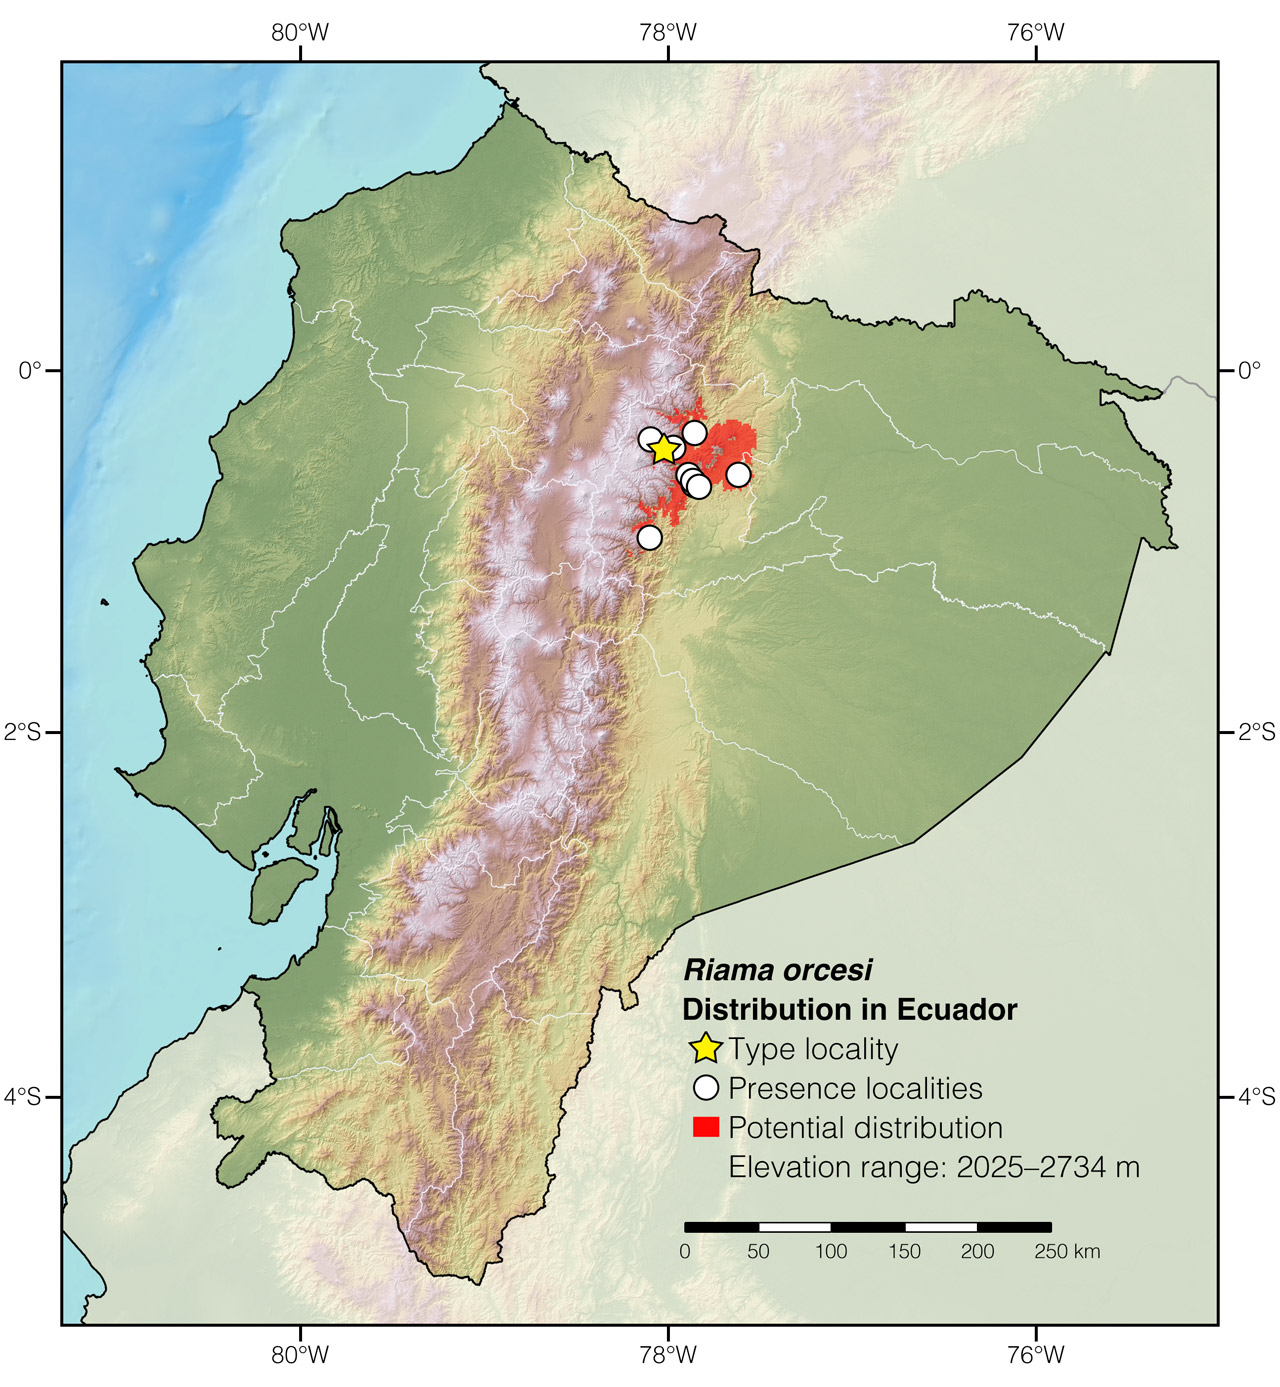 Distribution of Riama orcesi in Ecuador